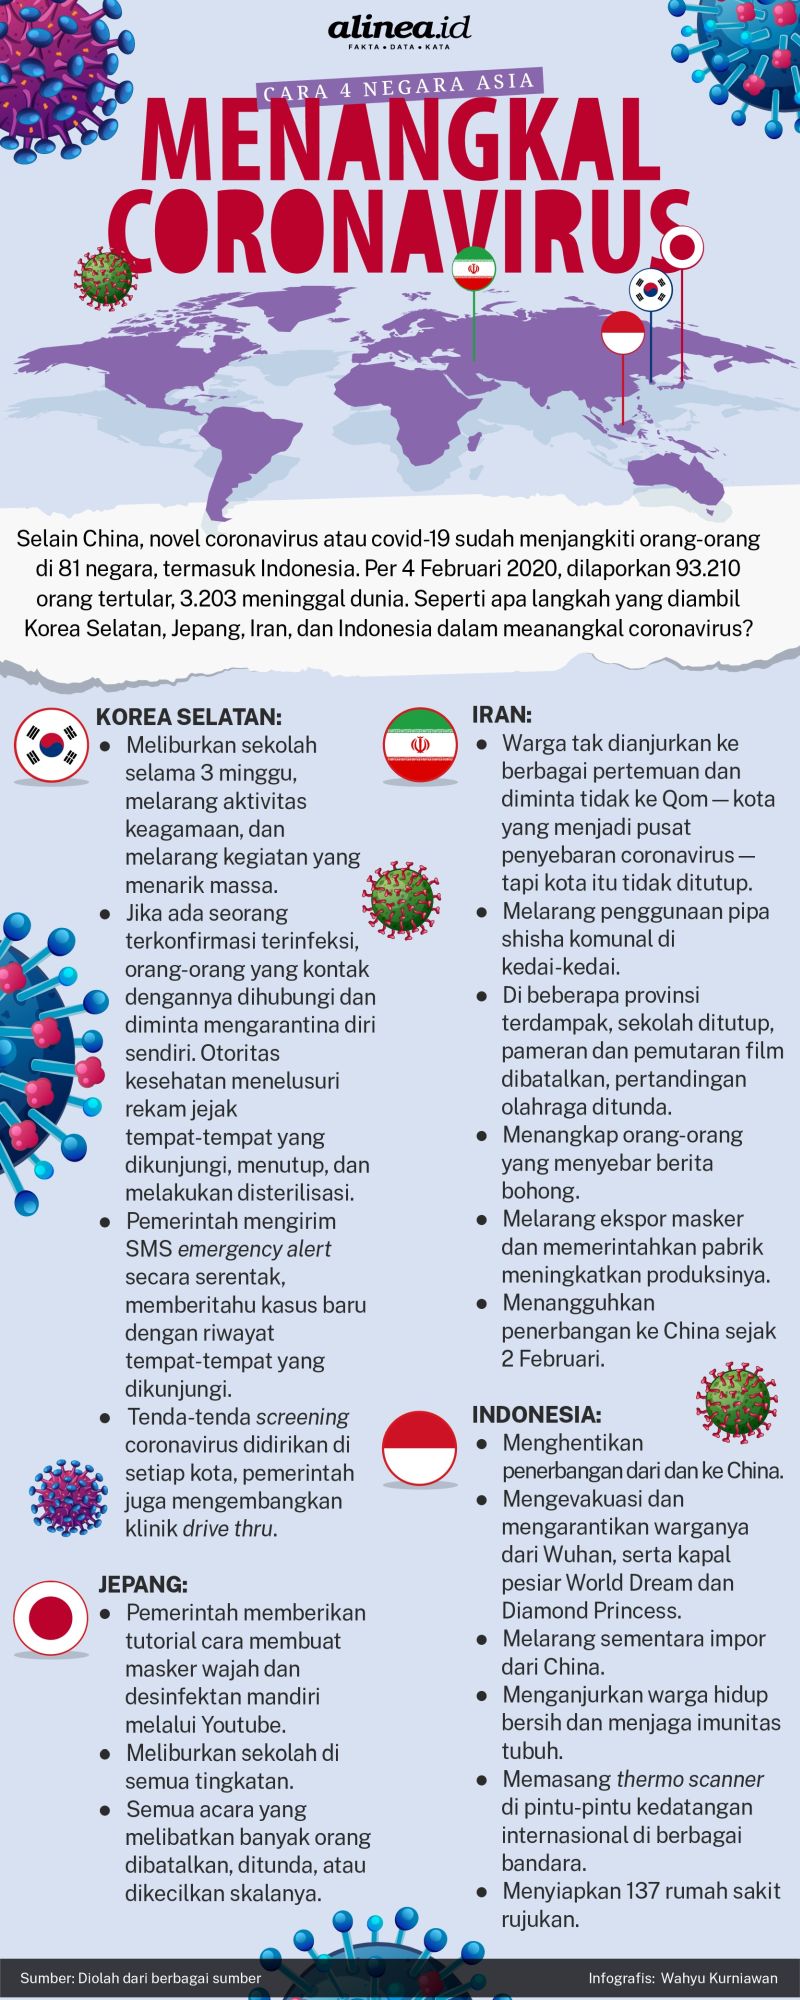 Infografik coronavirus. Alinea.id/Wahyu Kurniawan.